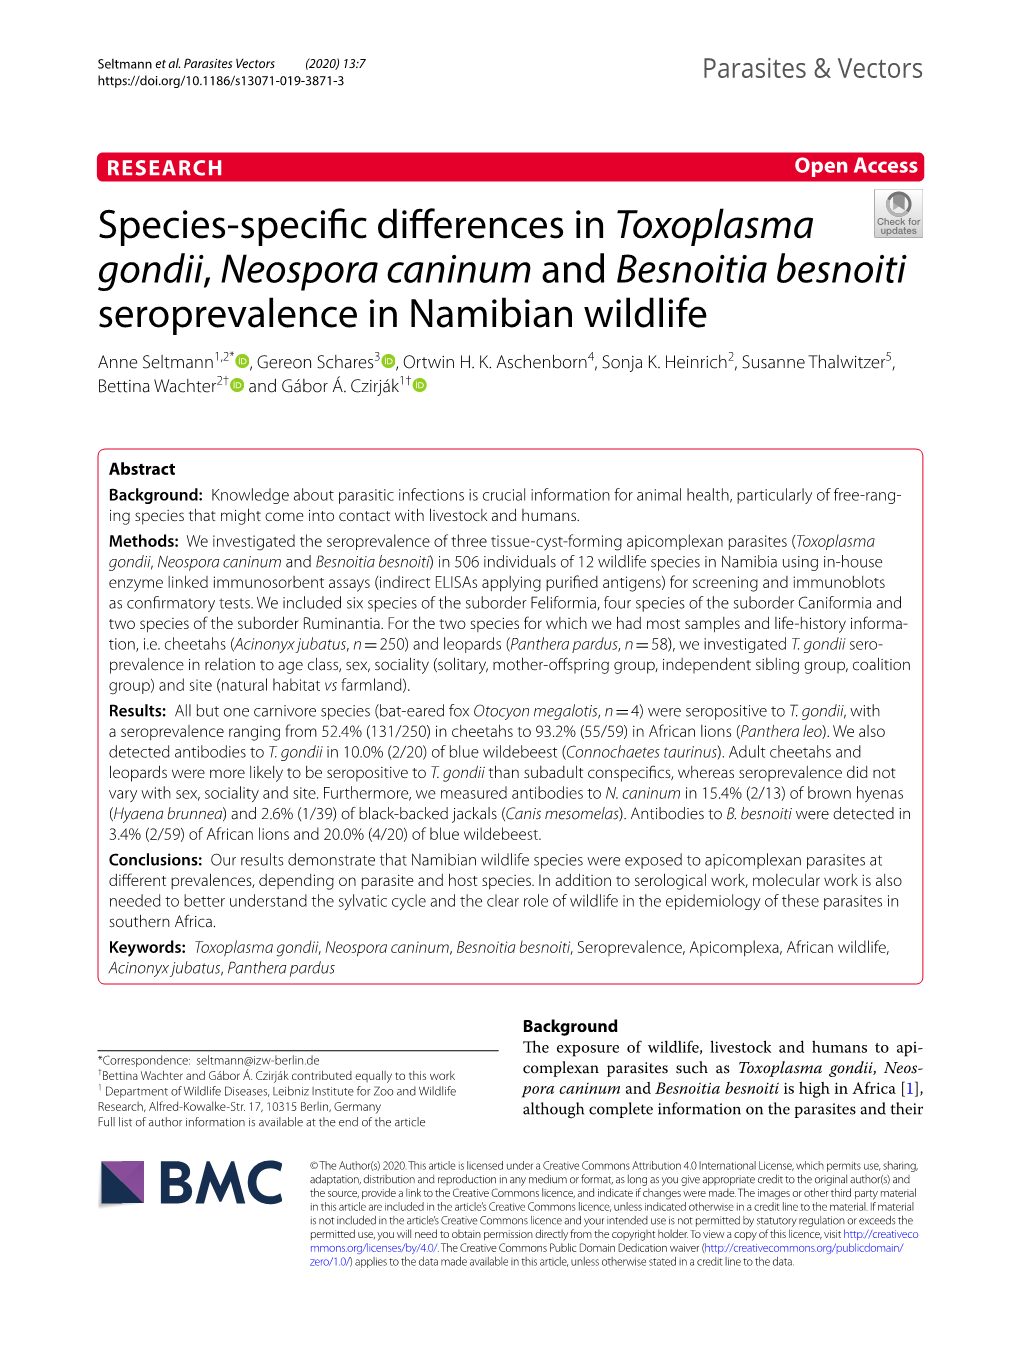 Toxoplasma Gondii, Neospora Caninum and Besnoitia Besnoiti Seroprevalence in Namibian Wildlife Anne Seltmann1,2* , Gereon Schares3 , Ortwin H